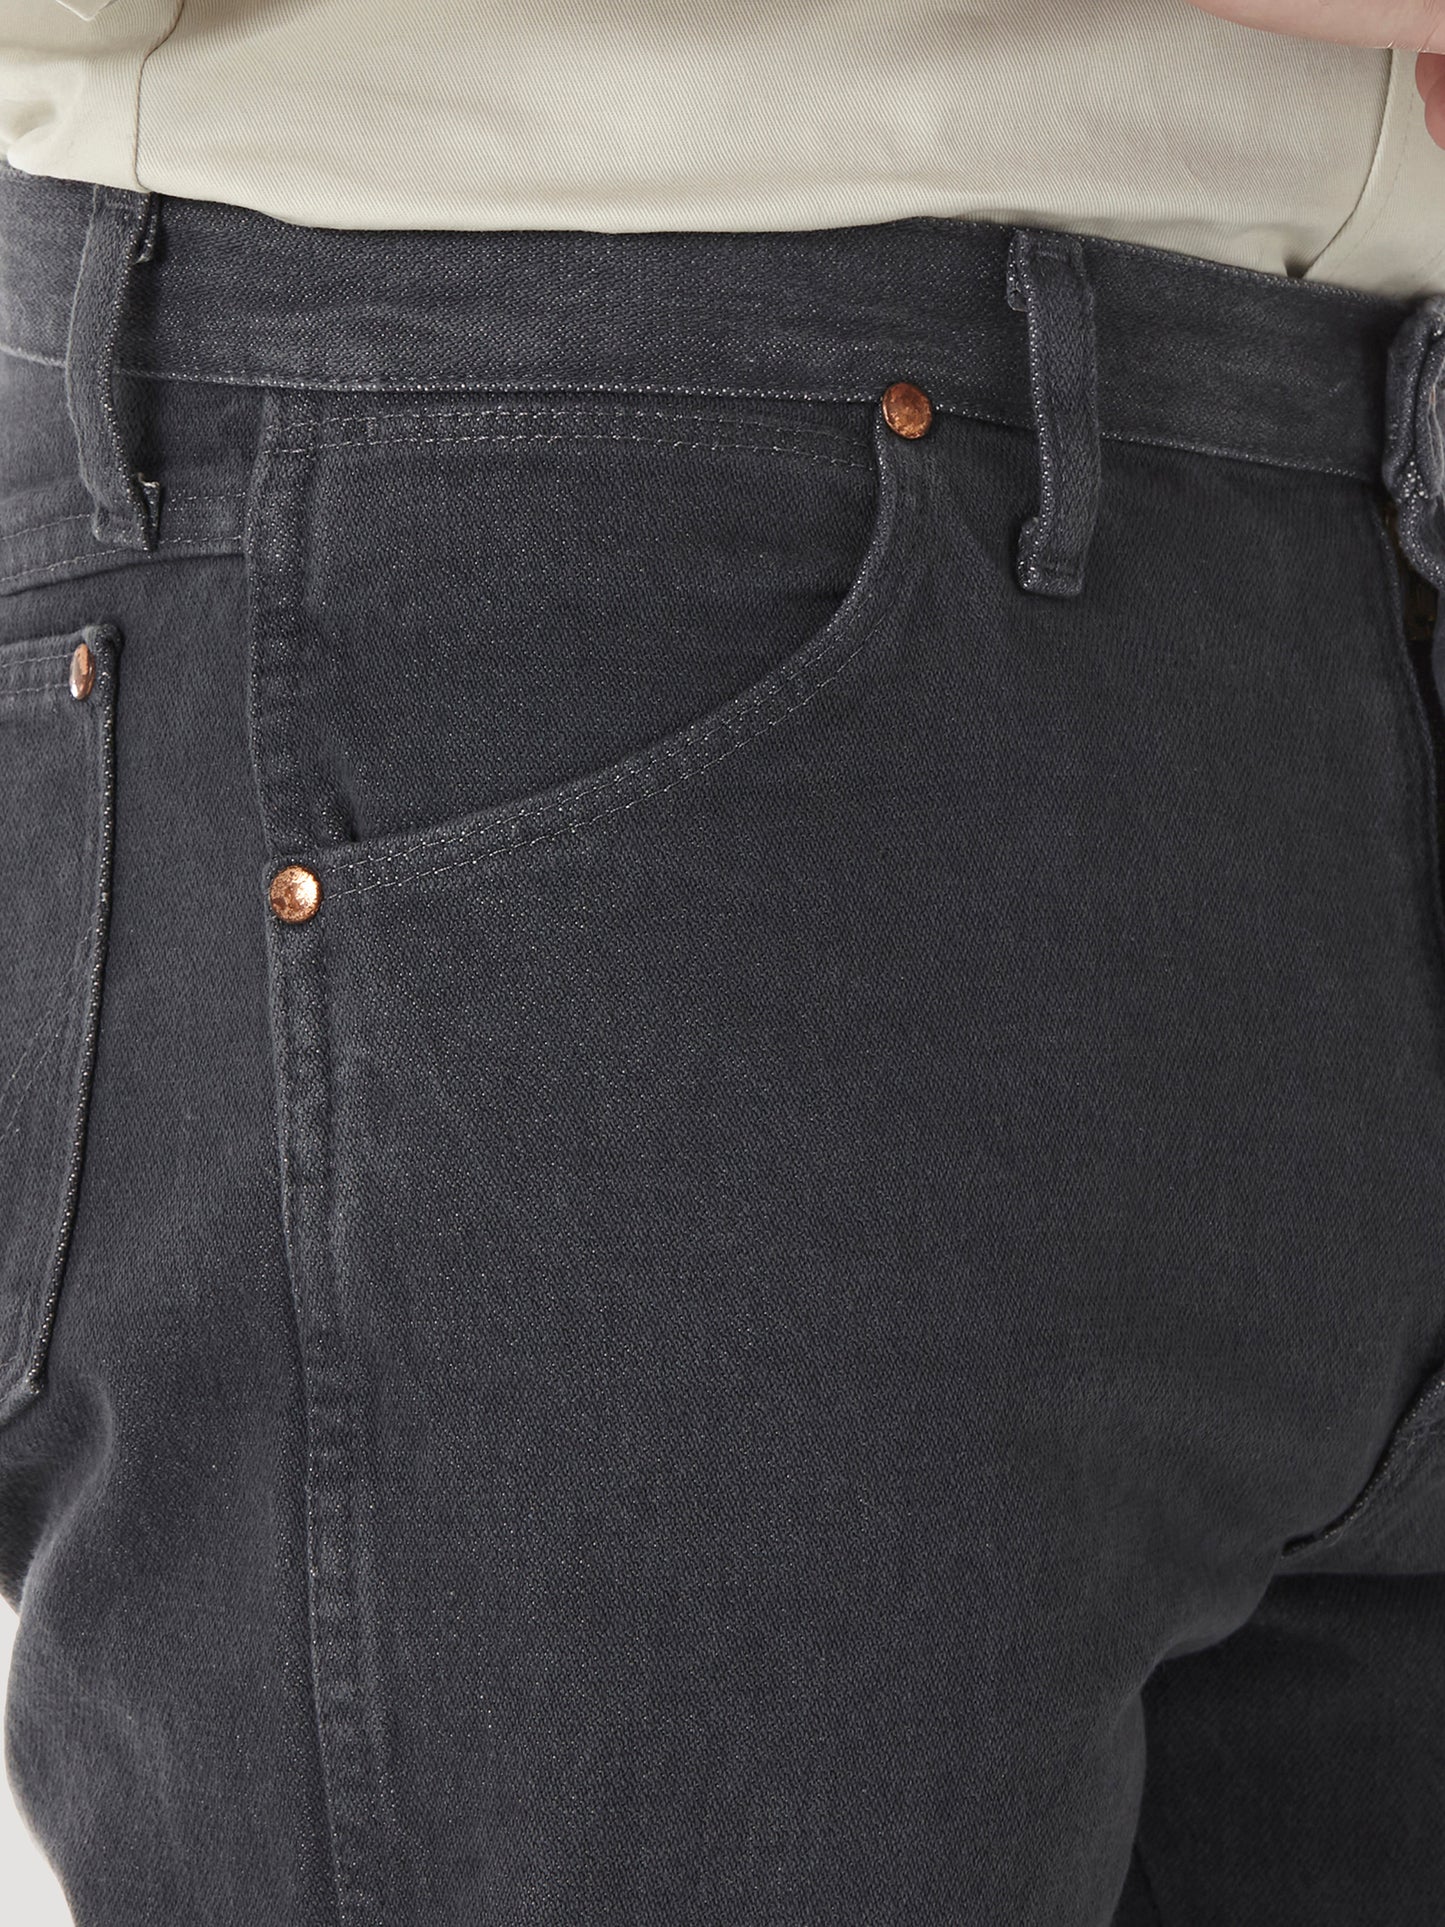 Wrangler USA Mens Cowboy Cut Original Fit Jeans - Charcoal Grey - 13MWZCG36